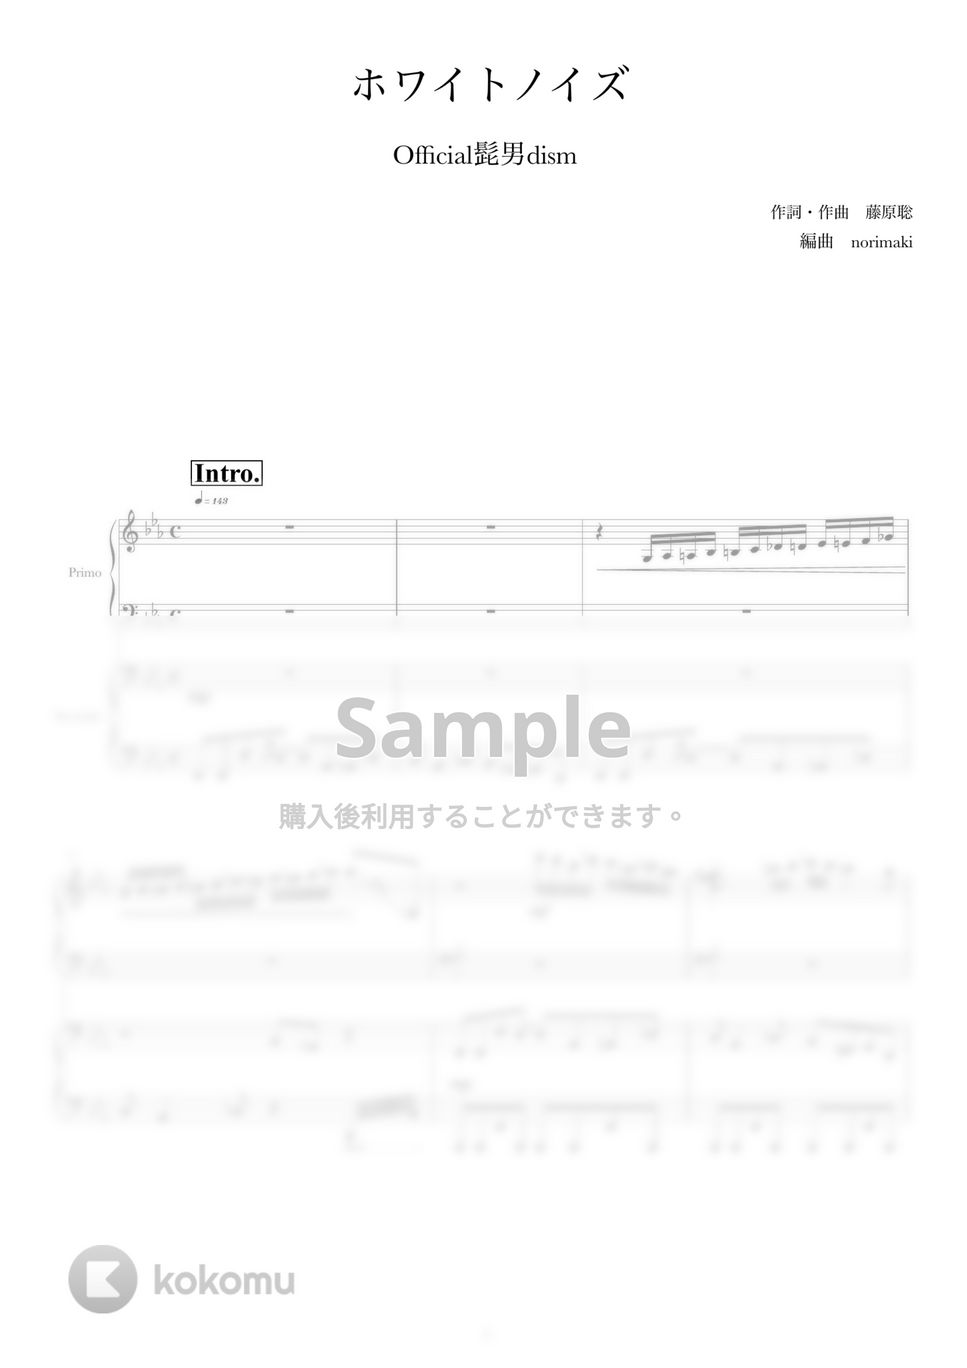 Official髭男dism - ホワイトノイズ (ピアノ連弾/東京リベンジャーズ) by norimaki